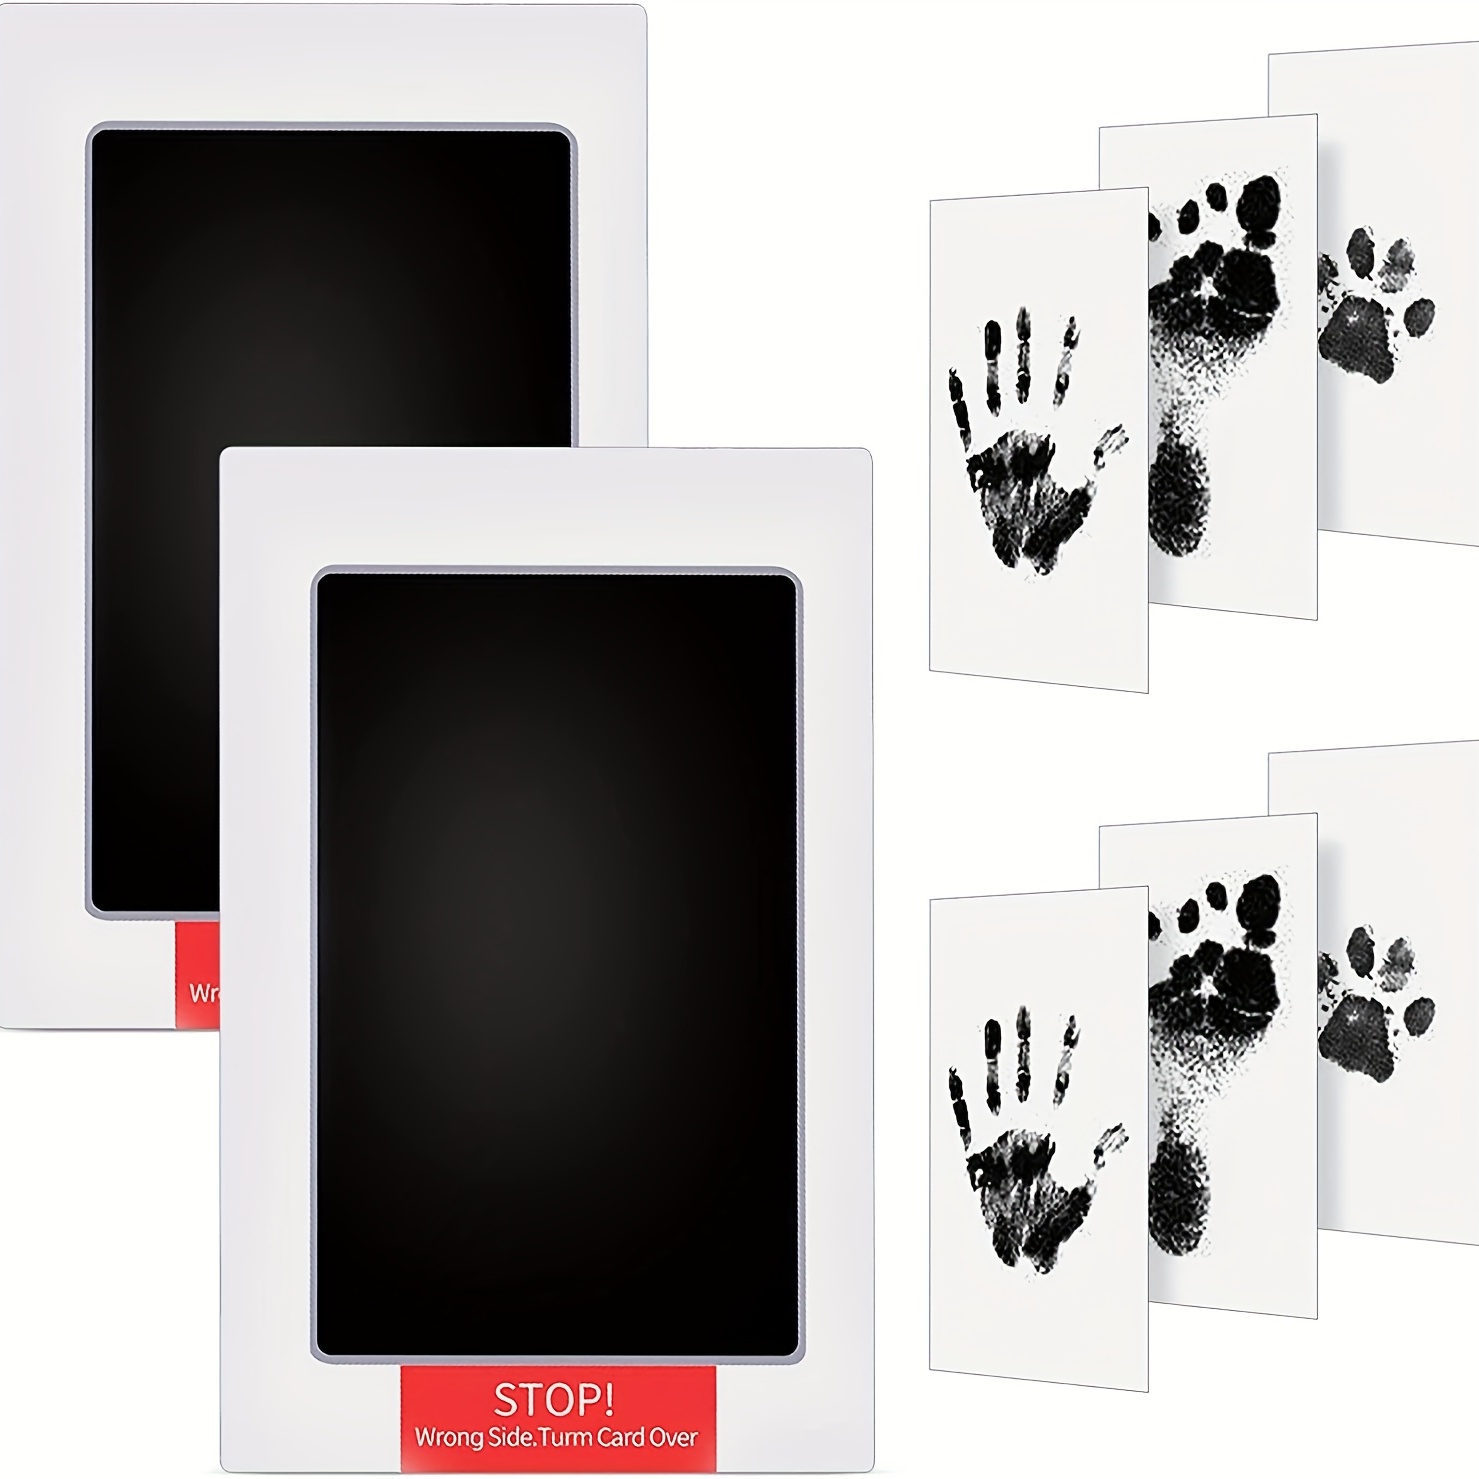  9pcs Inkless Hand and Footprint Kit, Baby Imprint Kit 3 Paw  Print Ink Pad with 6 Imprint Card Baby Keepsake Ornament Kit for Newborn  Shower Gift,Dog Paw Print Kit(Black, Pink